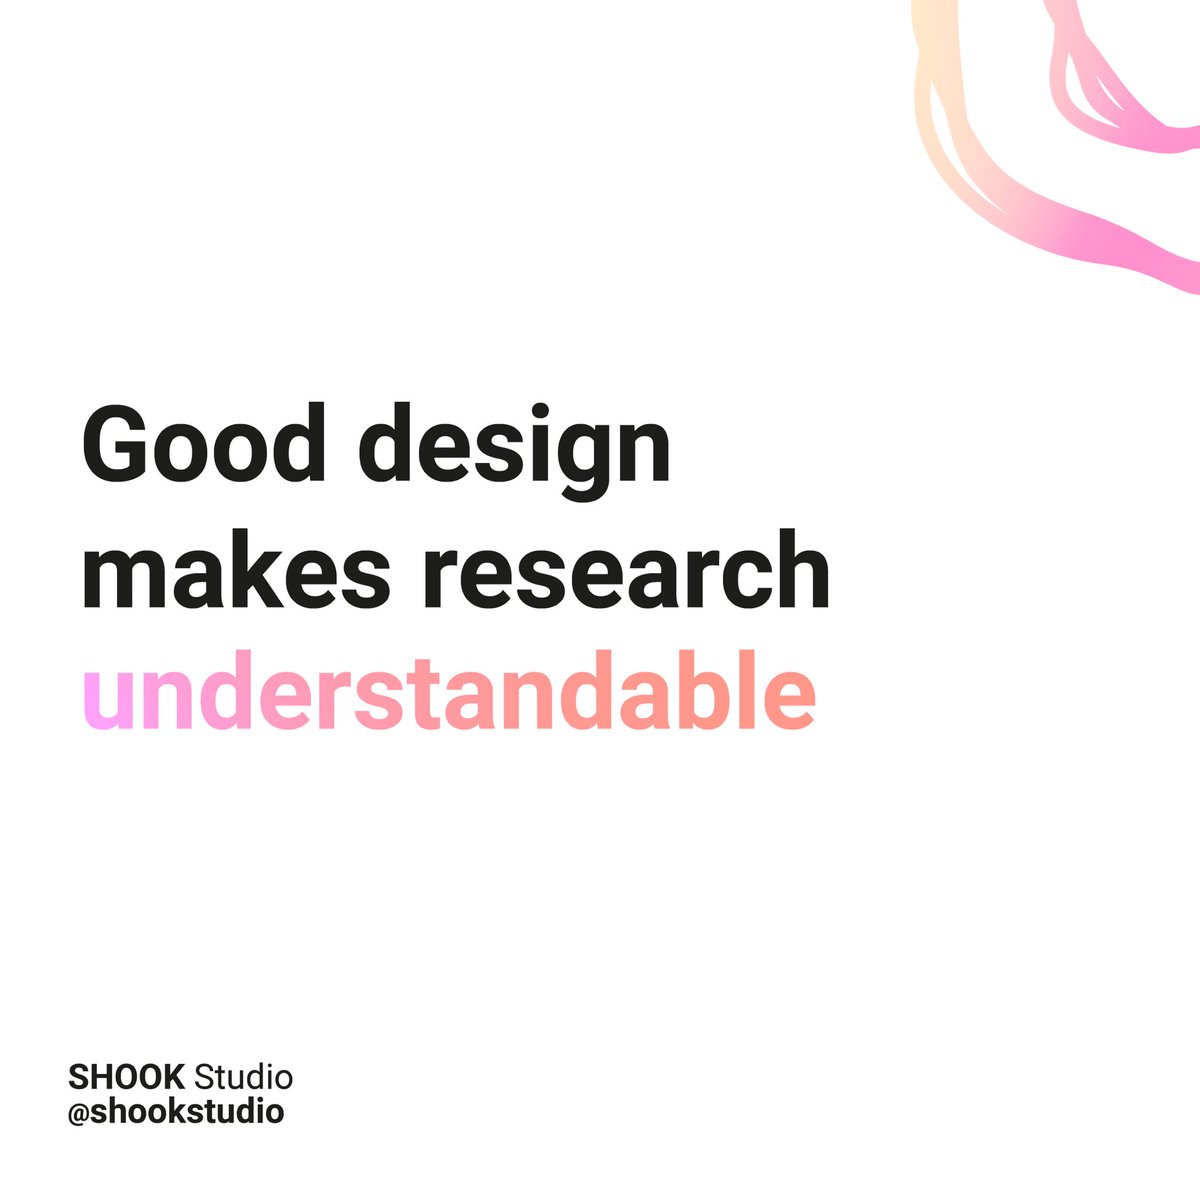 Paraphrasing Dieter Rams. Do you agree? #shookstudio #designphilosophy #scicomm #sciart